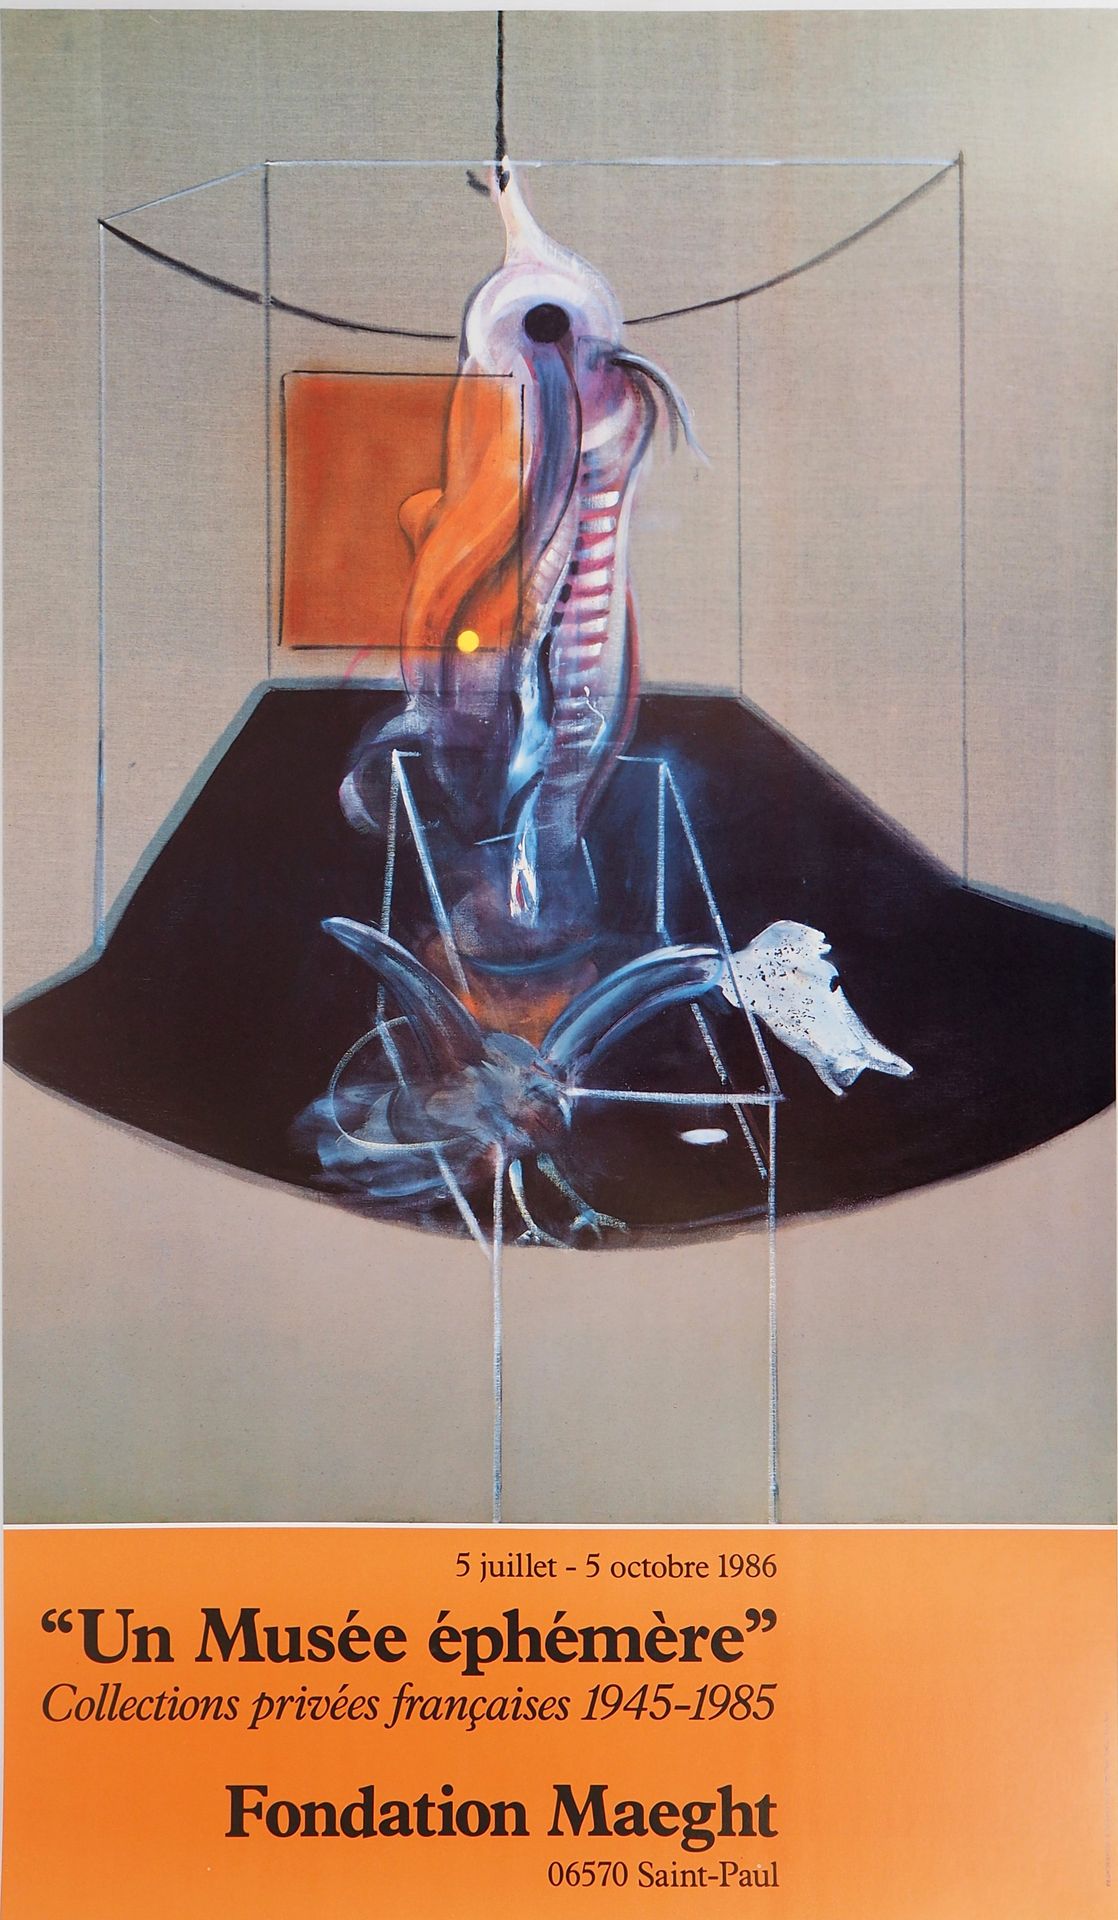 FRANCIS BACON Francis BACON (后)

肉类和鸟类的尸体，1986年

原始复古海报（Arte印刷厂

无符号

厚纸上78×45.5&hellip;